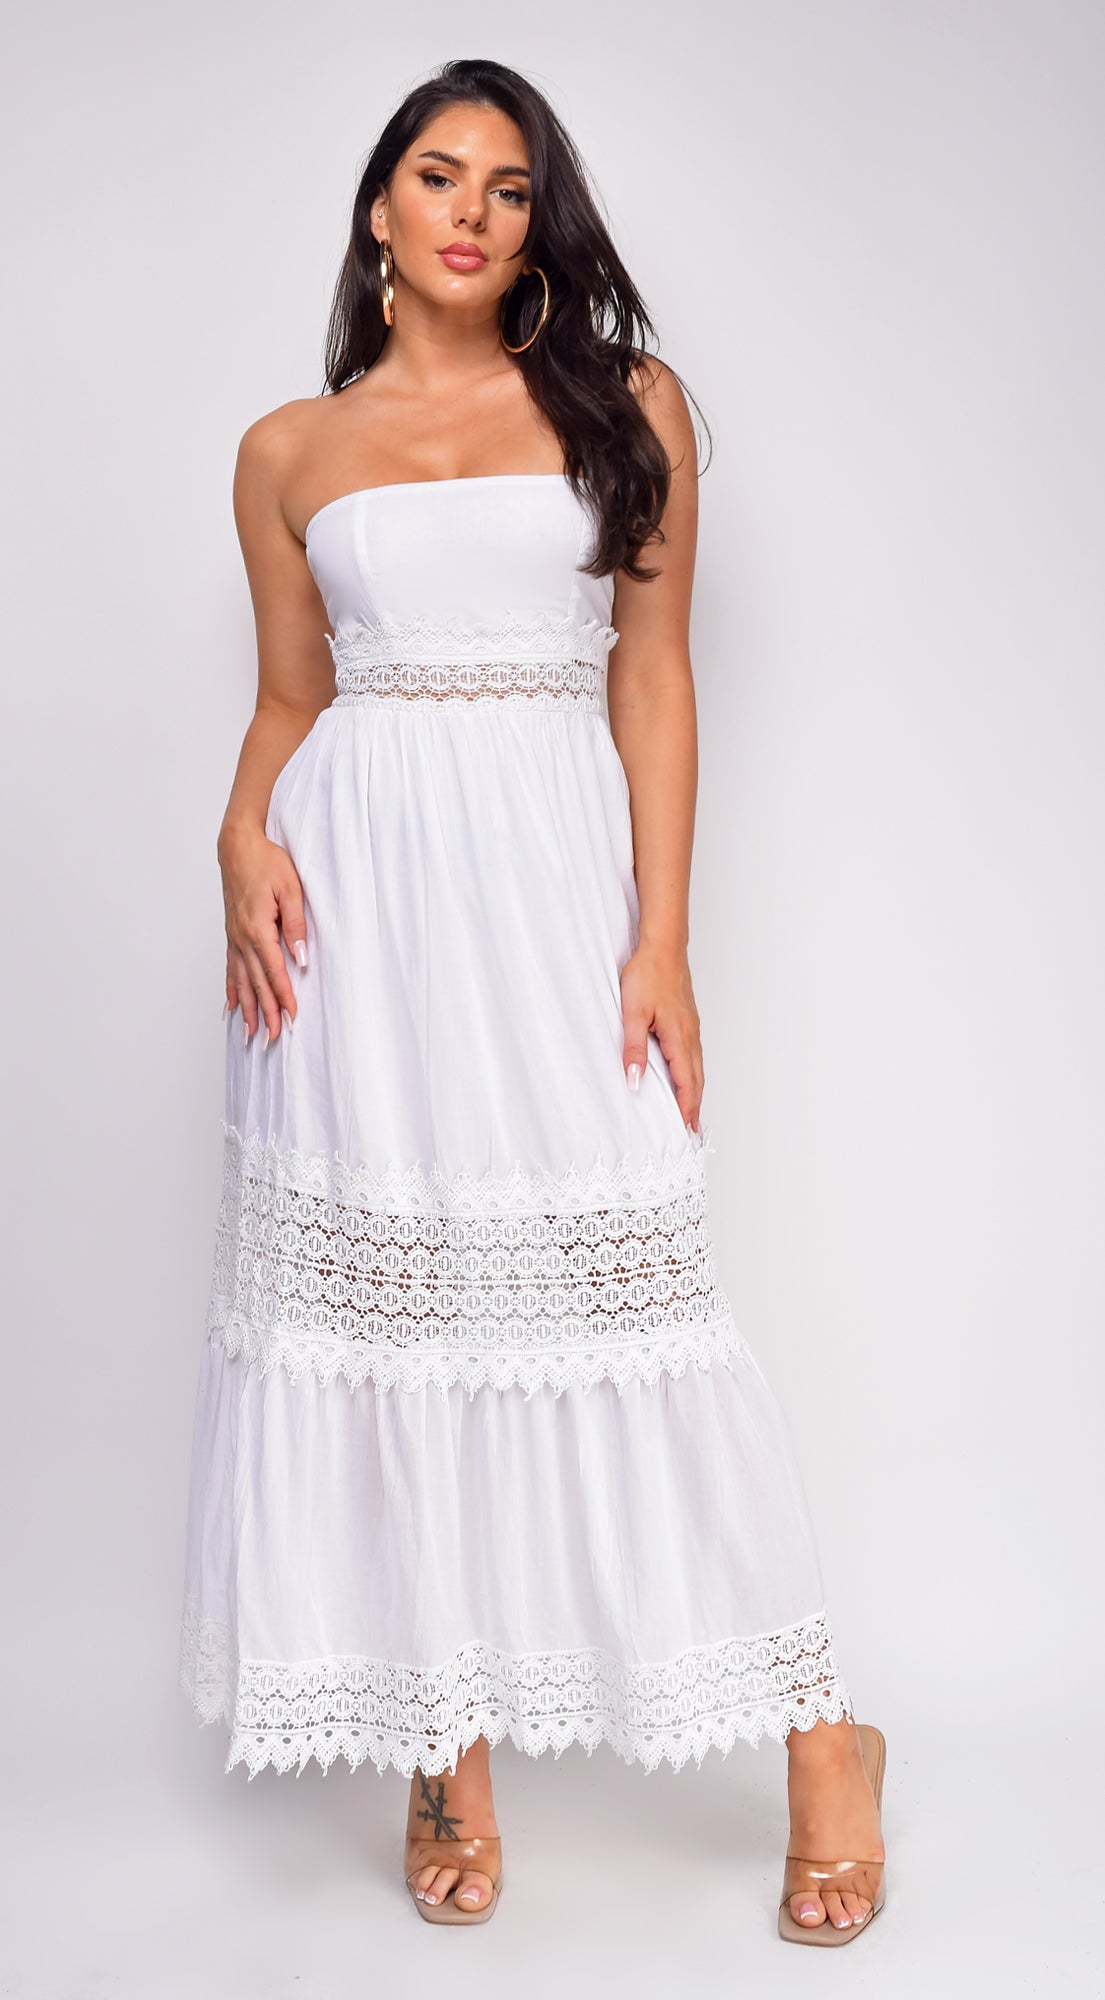 Zella White Sleeveless Maxi Dress